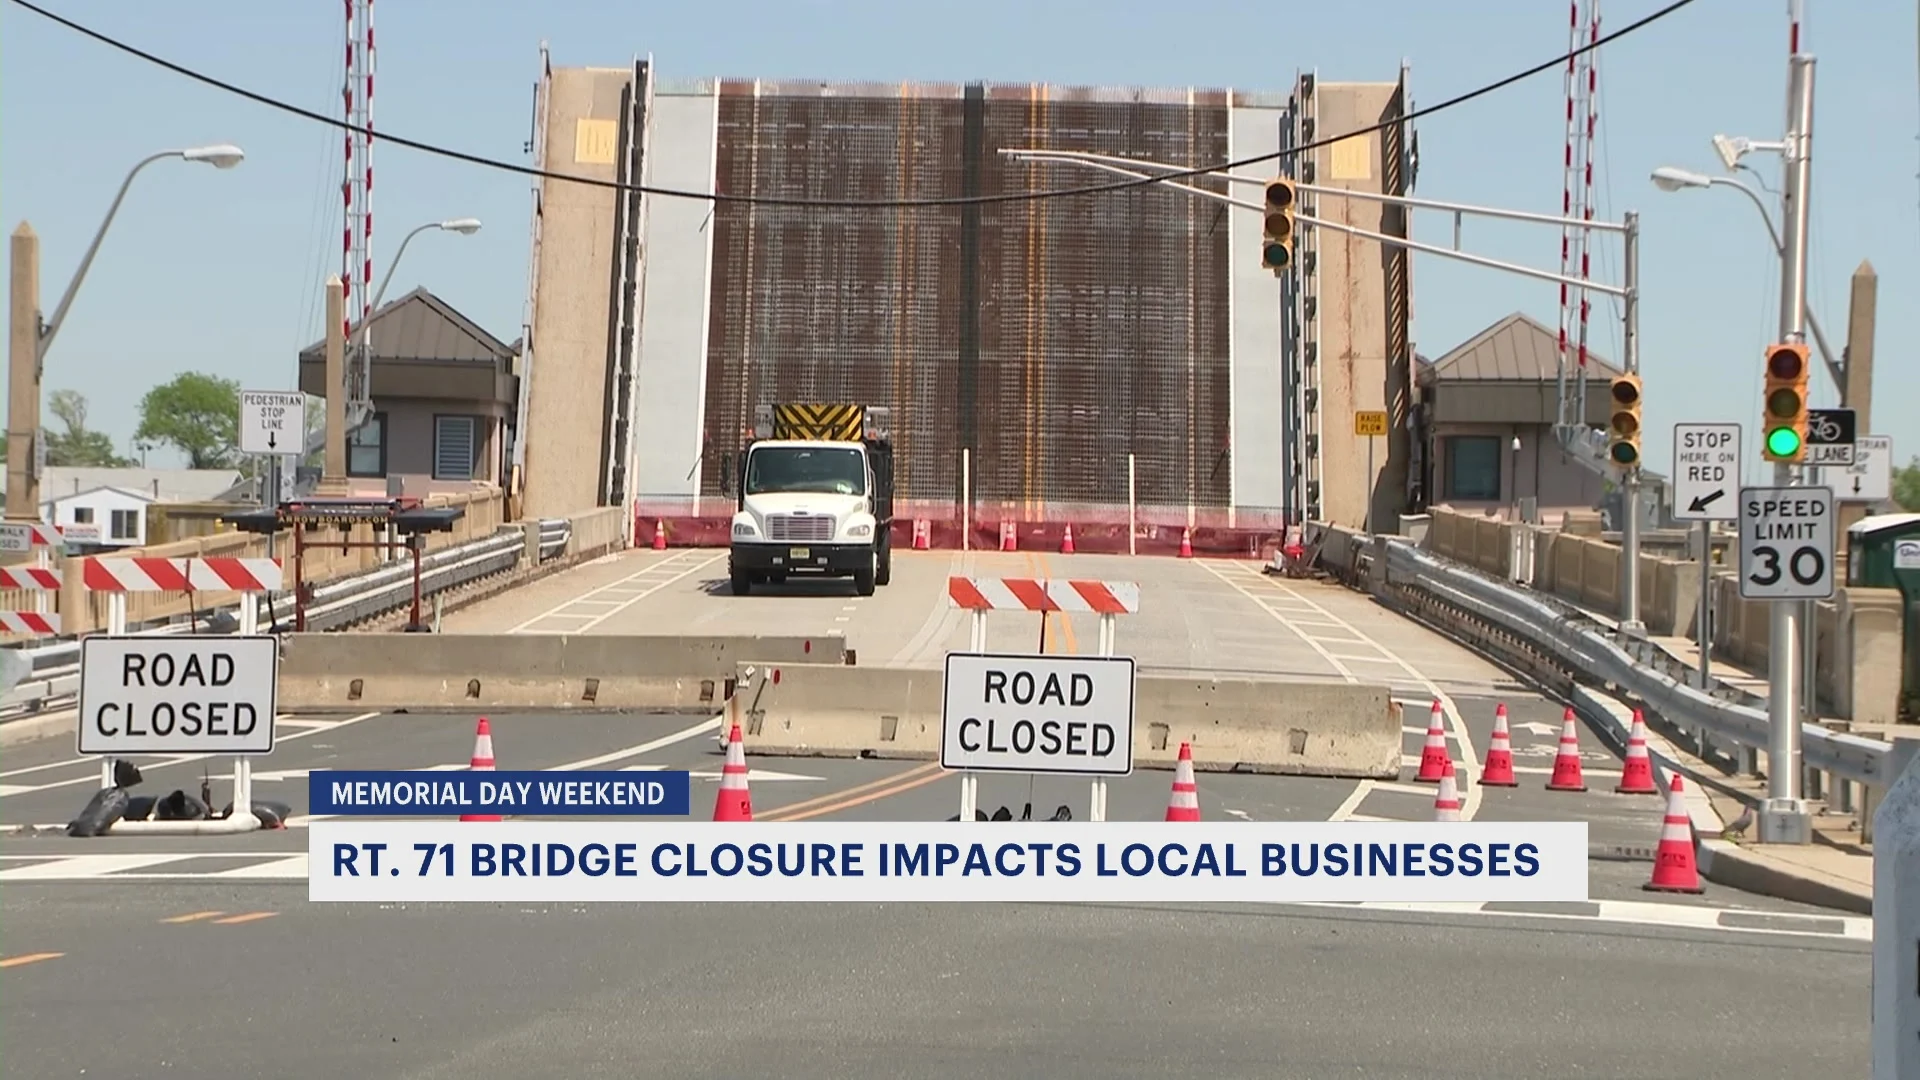 Jersey Shore businesses optimistic for profitable Memorial Day, despite Route 71 bridge repairs.